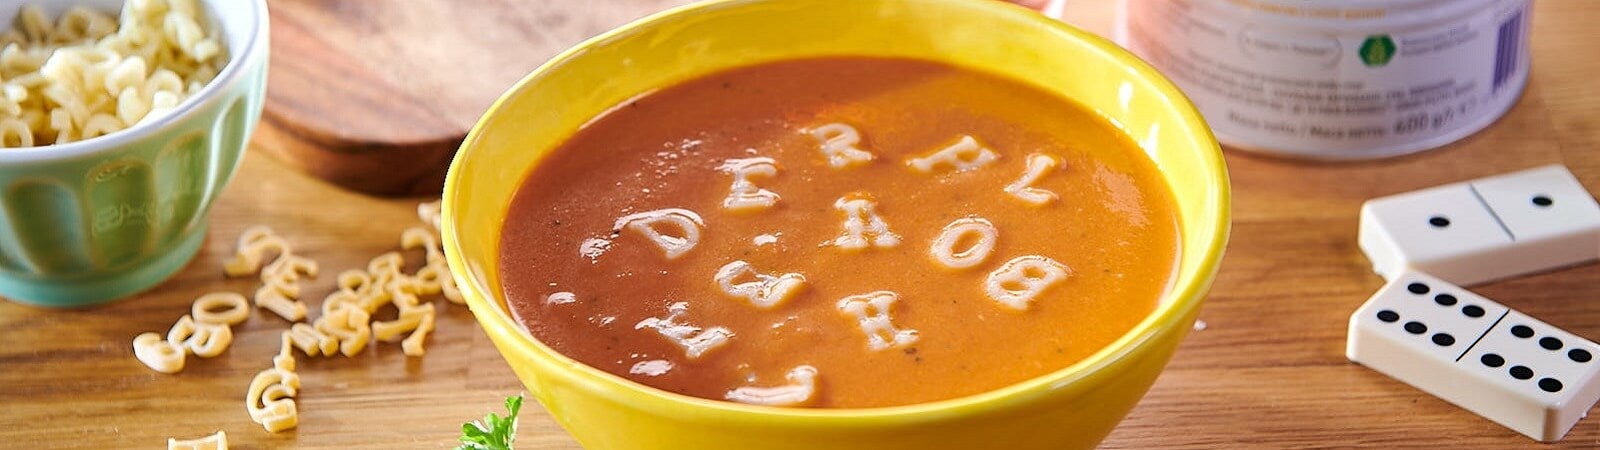 Literkowa zupa pomidorowa